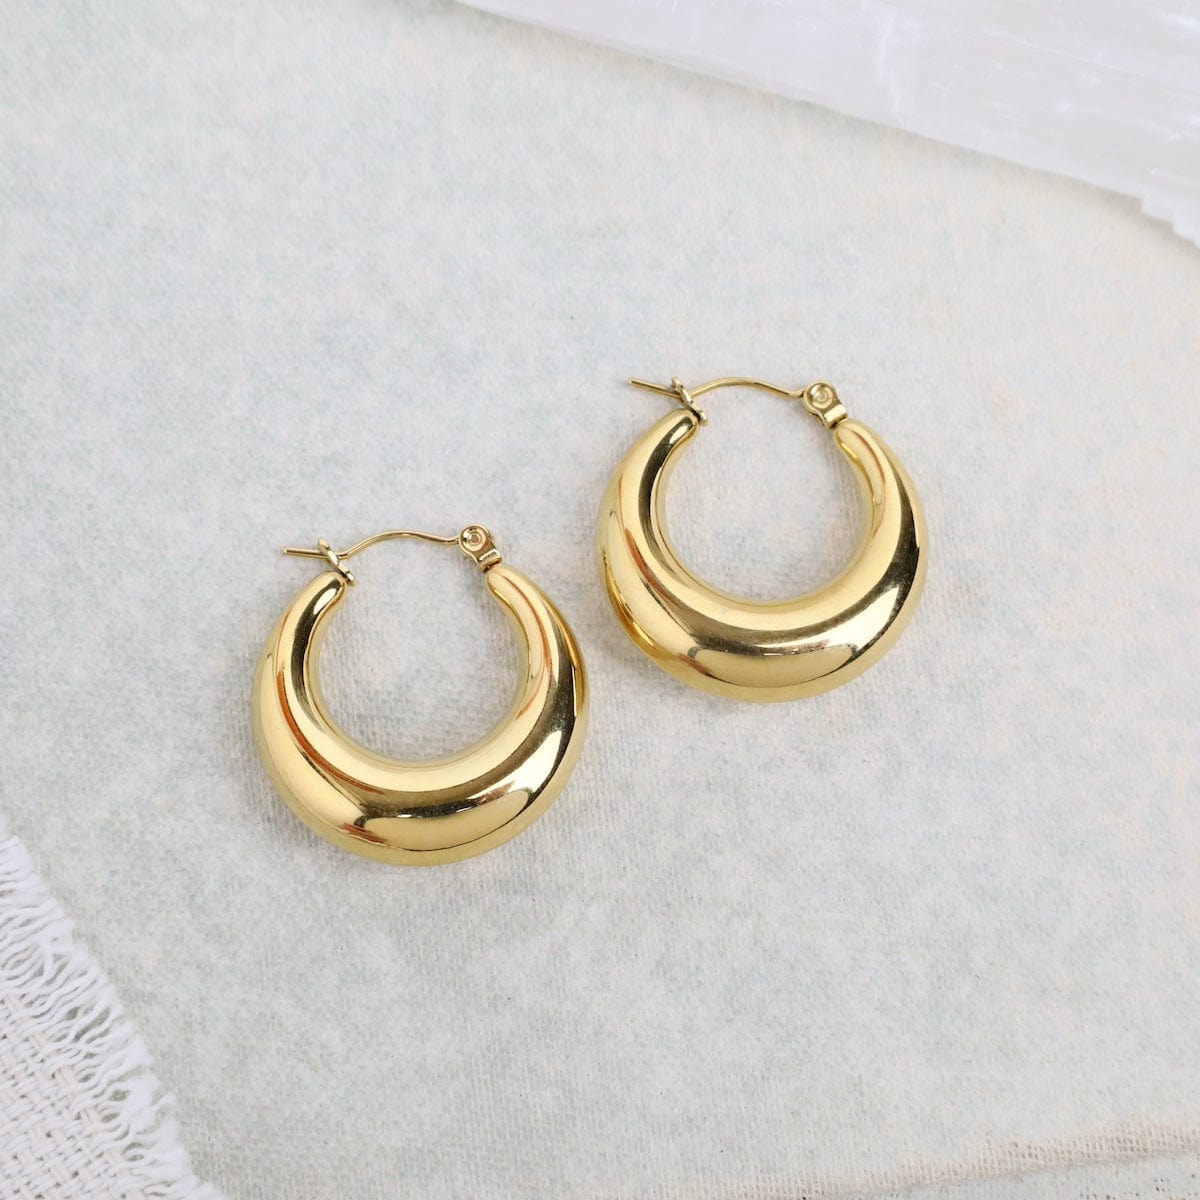 EAR-GPL PETRA // The Moon hoop earrings - 18k gold plated